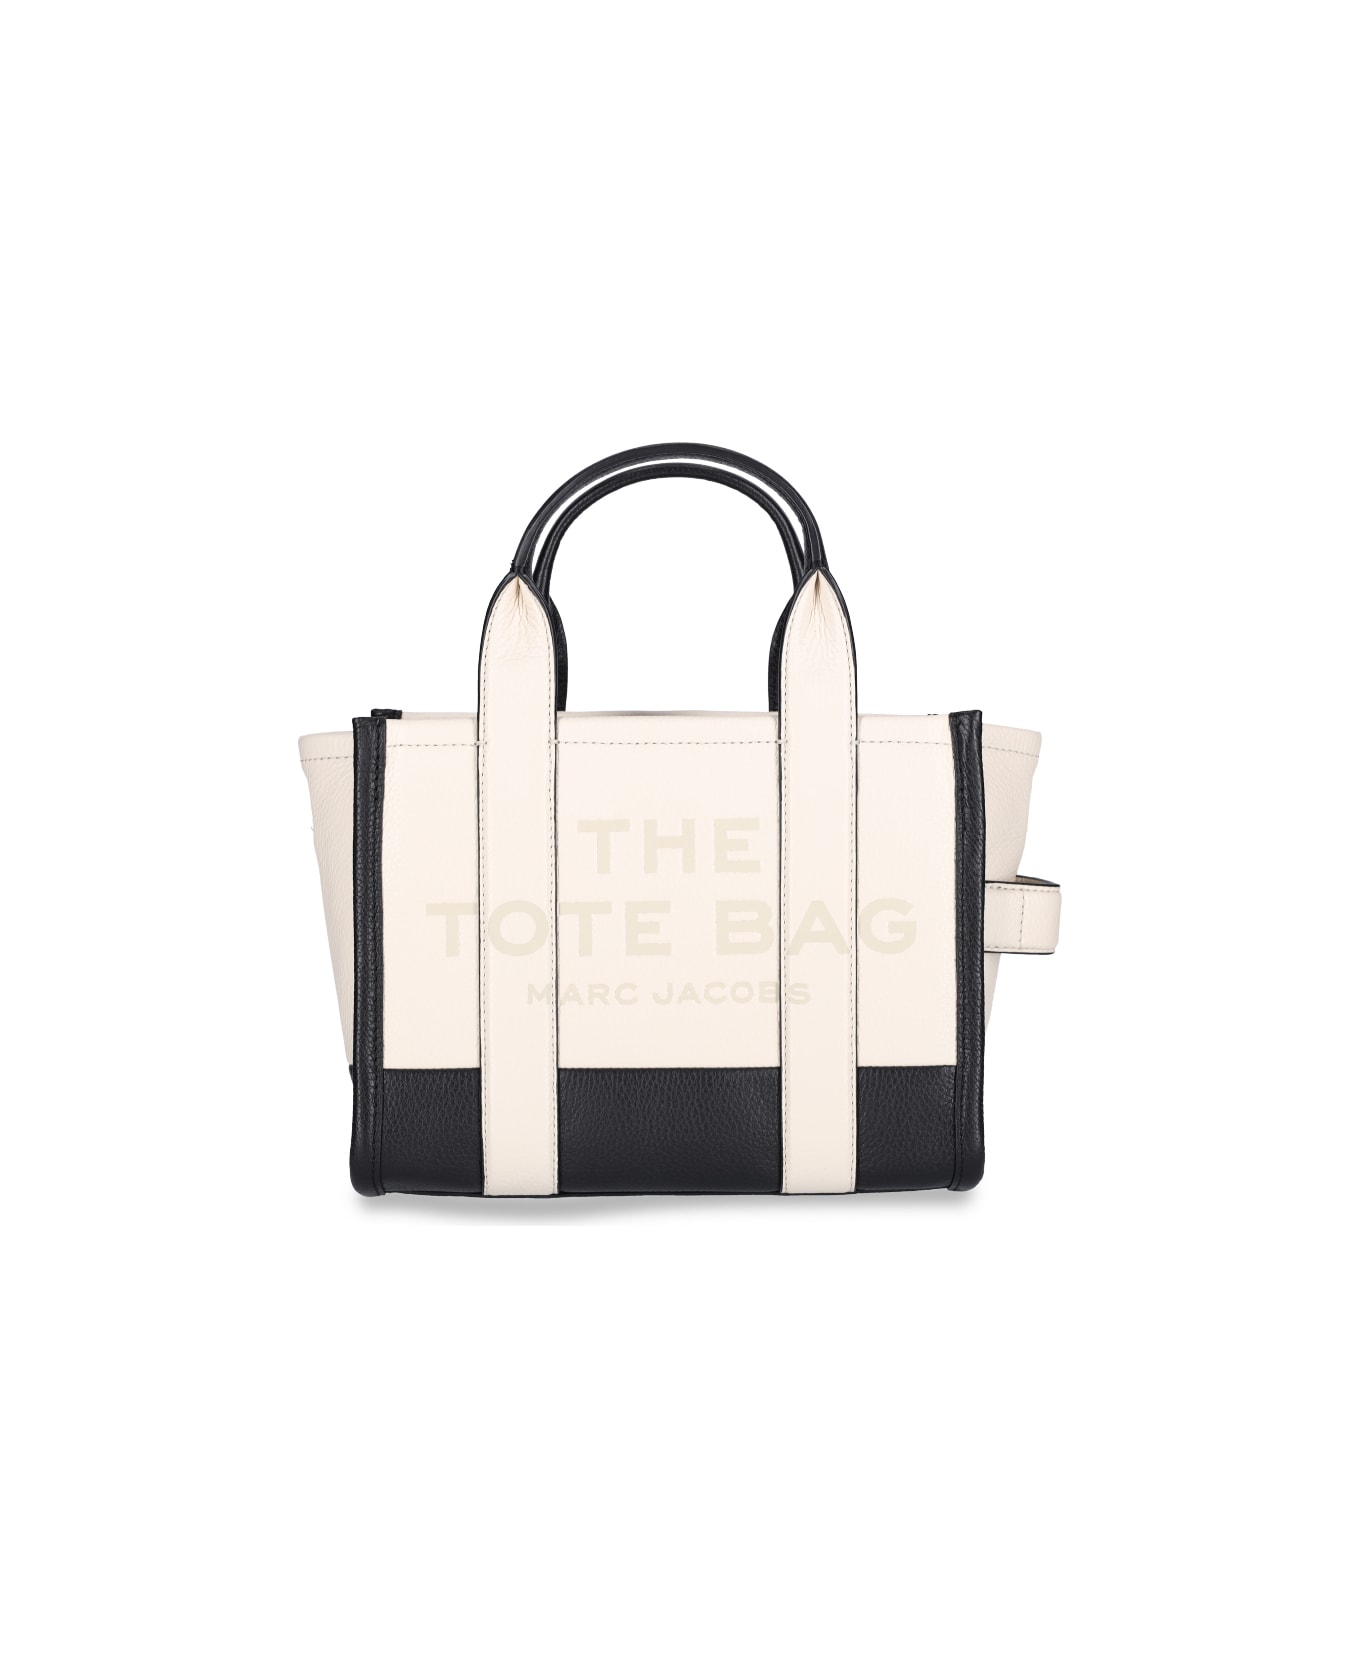 Marc Jacobs "the Colorblock" Mini Tote Bag - Crema